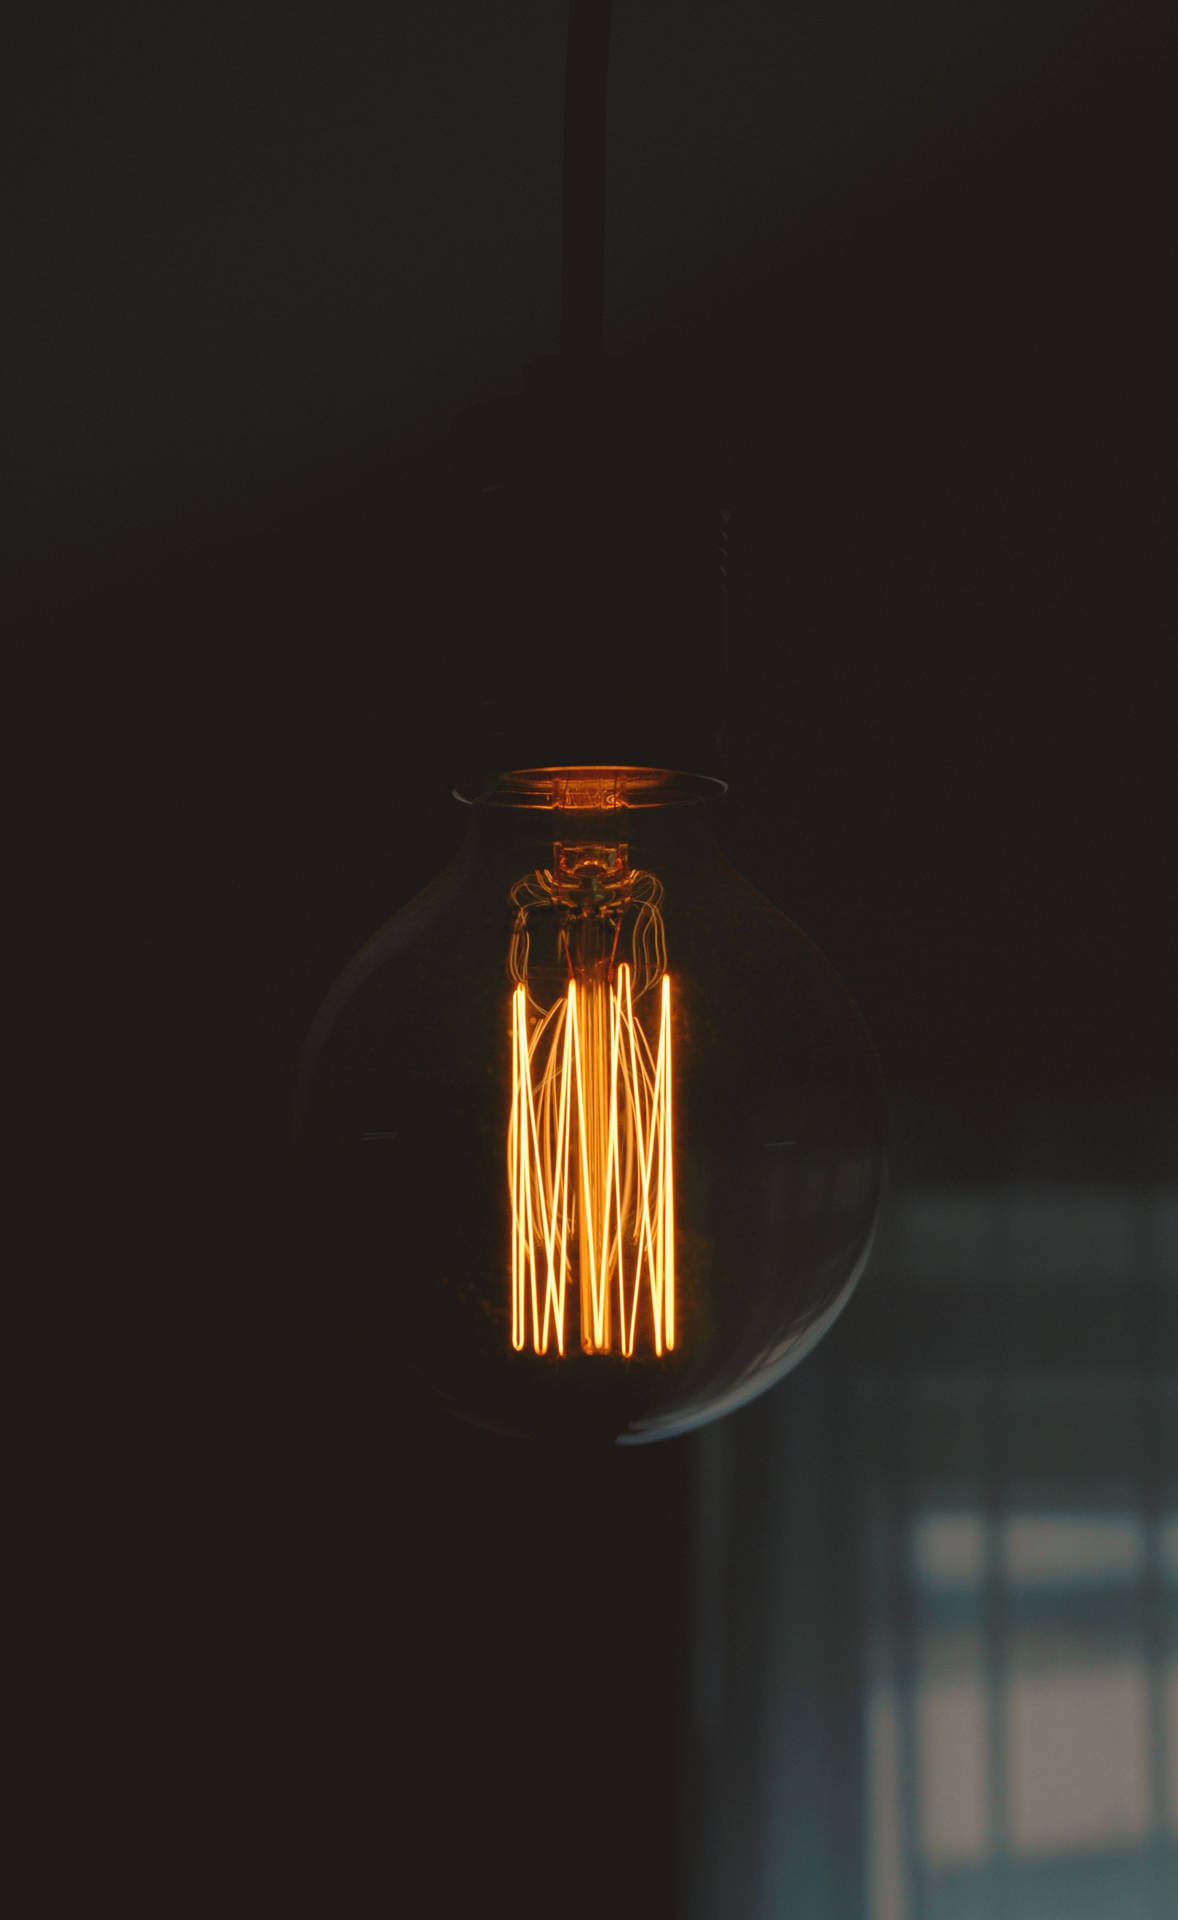 Illuminated OLED Lightbulb Against a Dark Background on an iPhone. Wallpaper